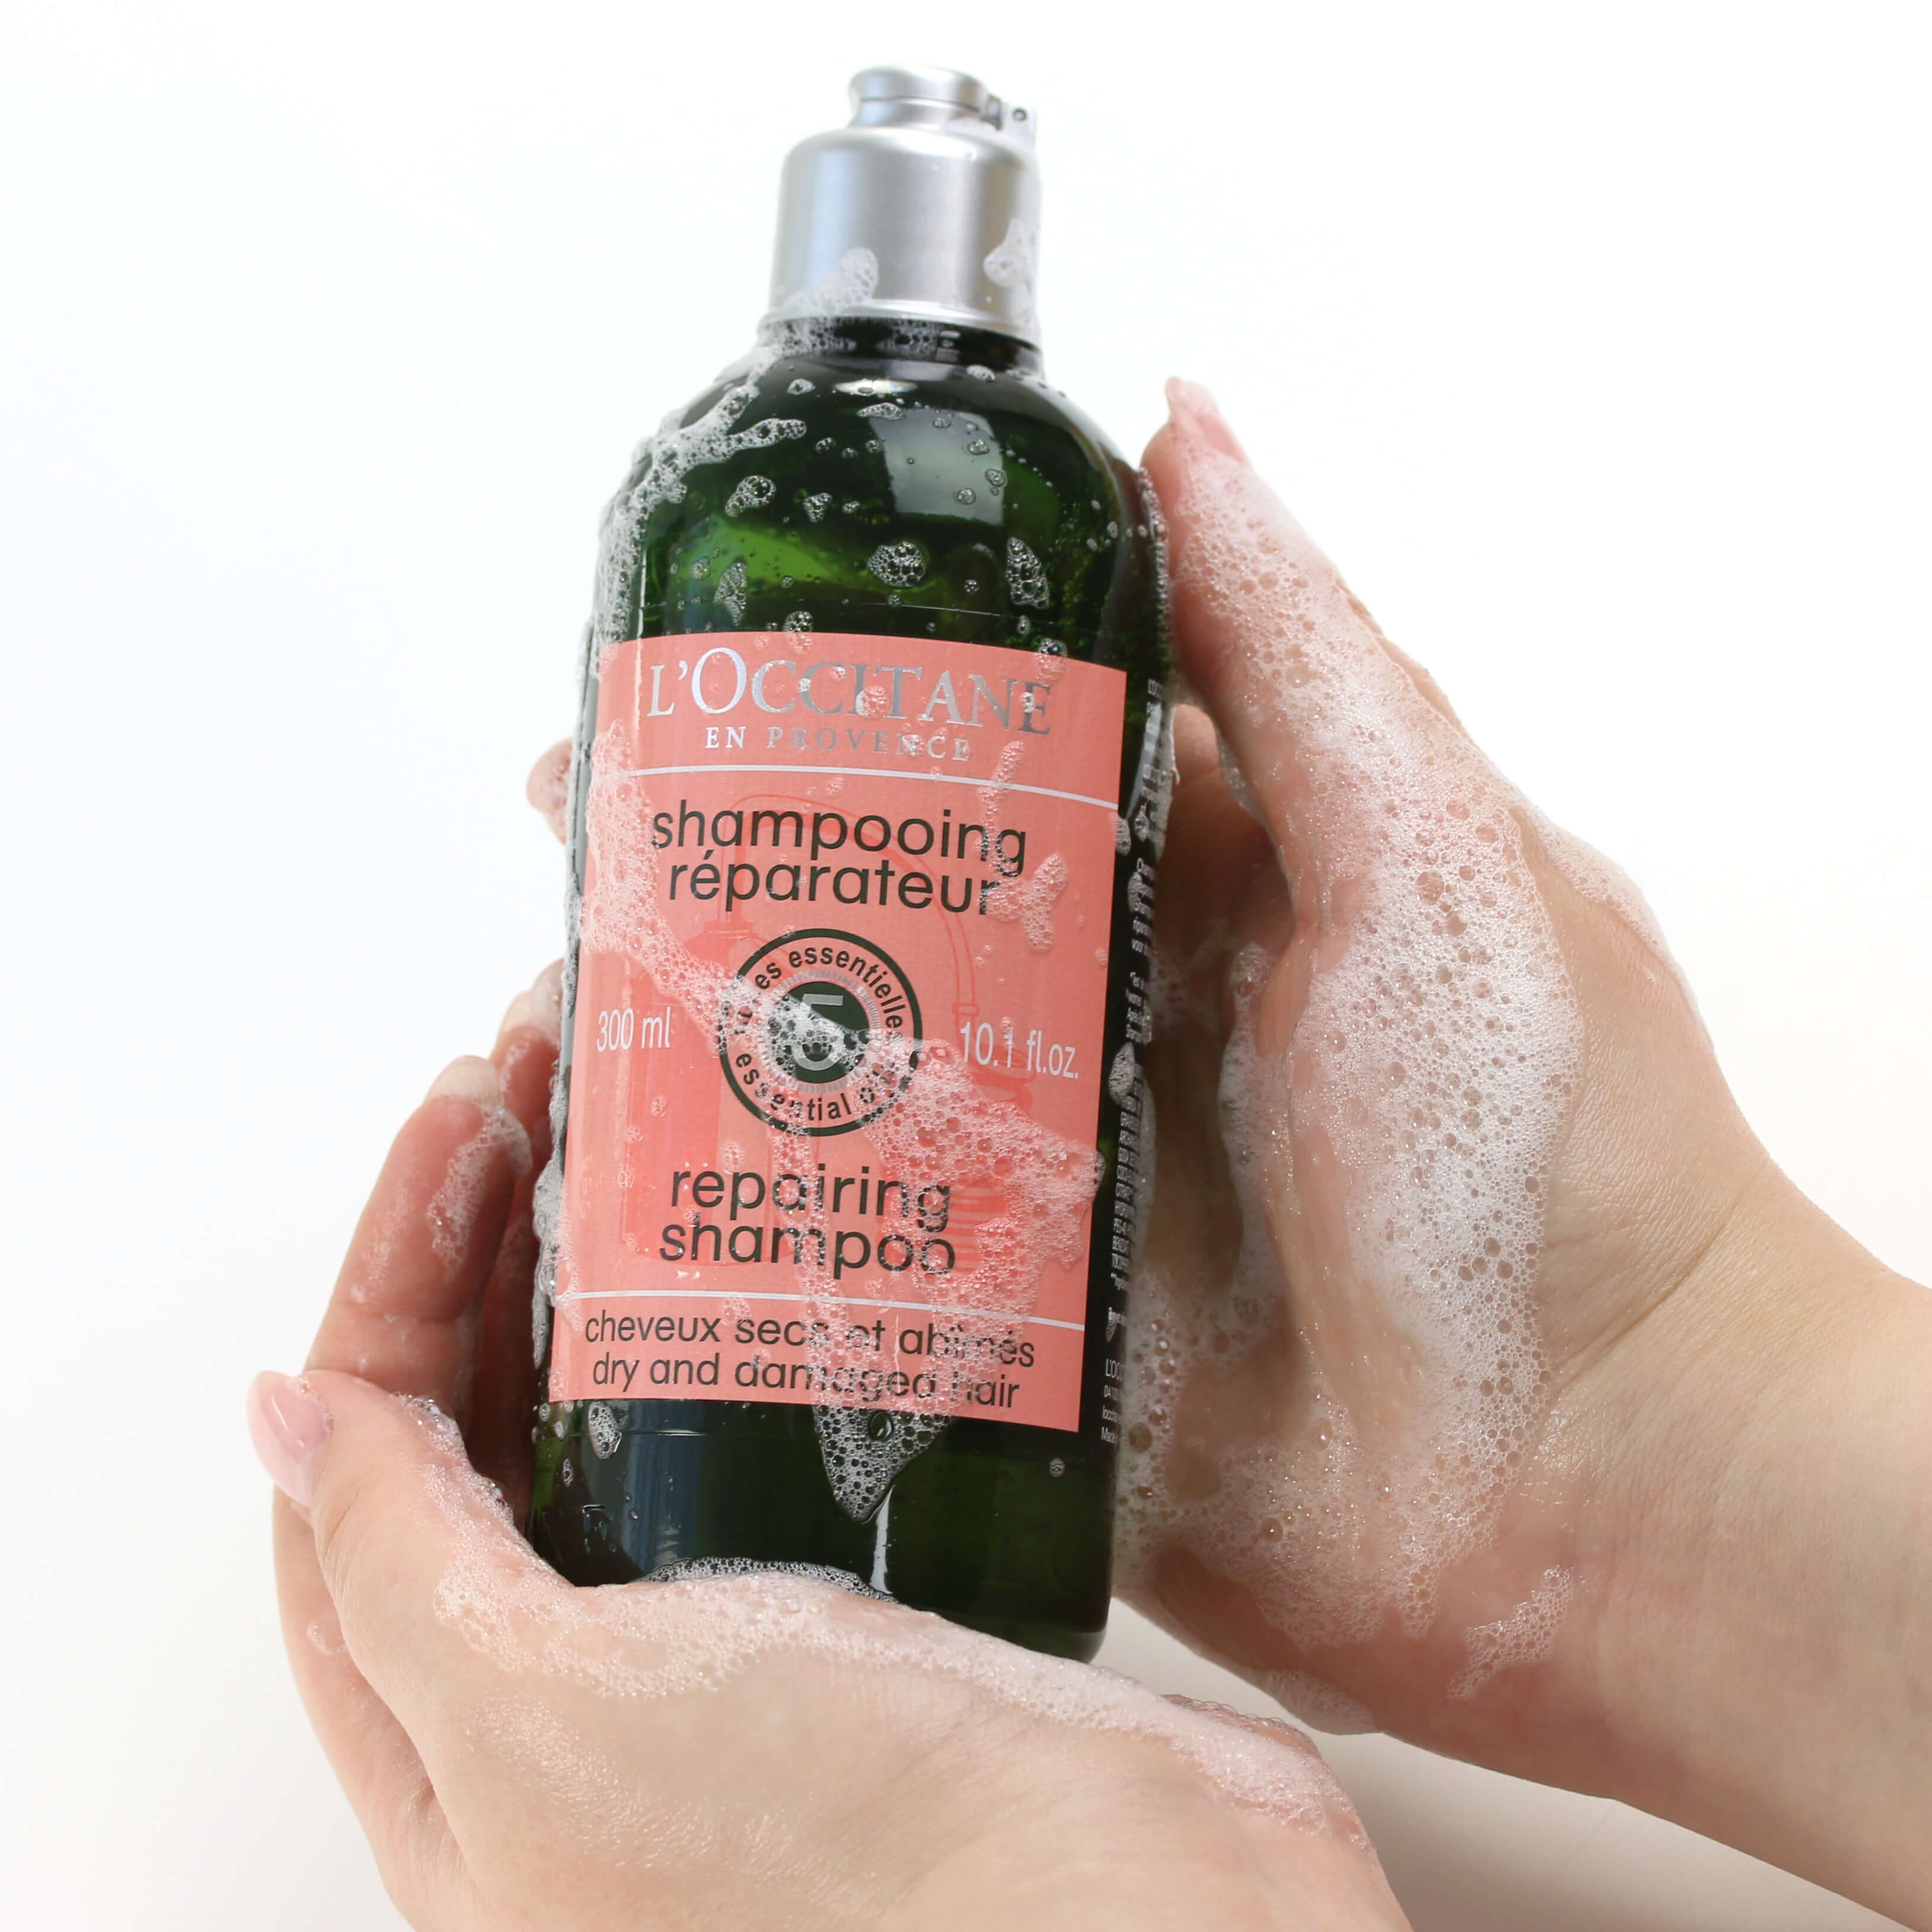 L'occitane Intensive Repair Shampoo + Conditioner 75 ml.  ด้วยกลิ่นหอมของน้ำมันหอมระเหย 5 ชนิด (กระดังงา สวีทออเร้นจ์ ลาเวนเดอร์ เจอเรเนียม และแองเจลิก้า ) ช่วยปลอบประโลมหนังศีรษะ มอบกลิ่นหอมอ่อนโยน ให้เส้นผม  ไม่ให้เส้นผมพันกัน ซ่อมแซมเส้นผมอย่างเข้มข้น สำหรับผมแห้งเสีย และเสียจากสารเคมี